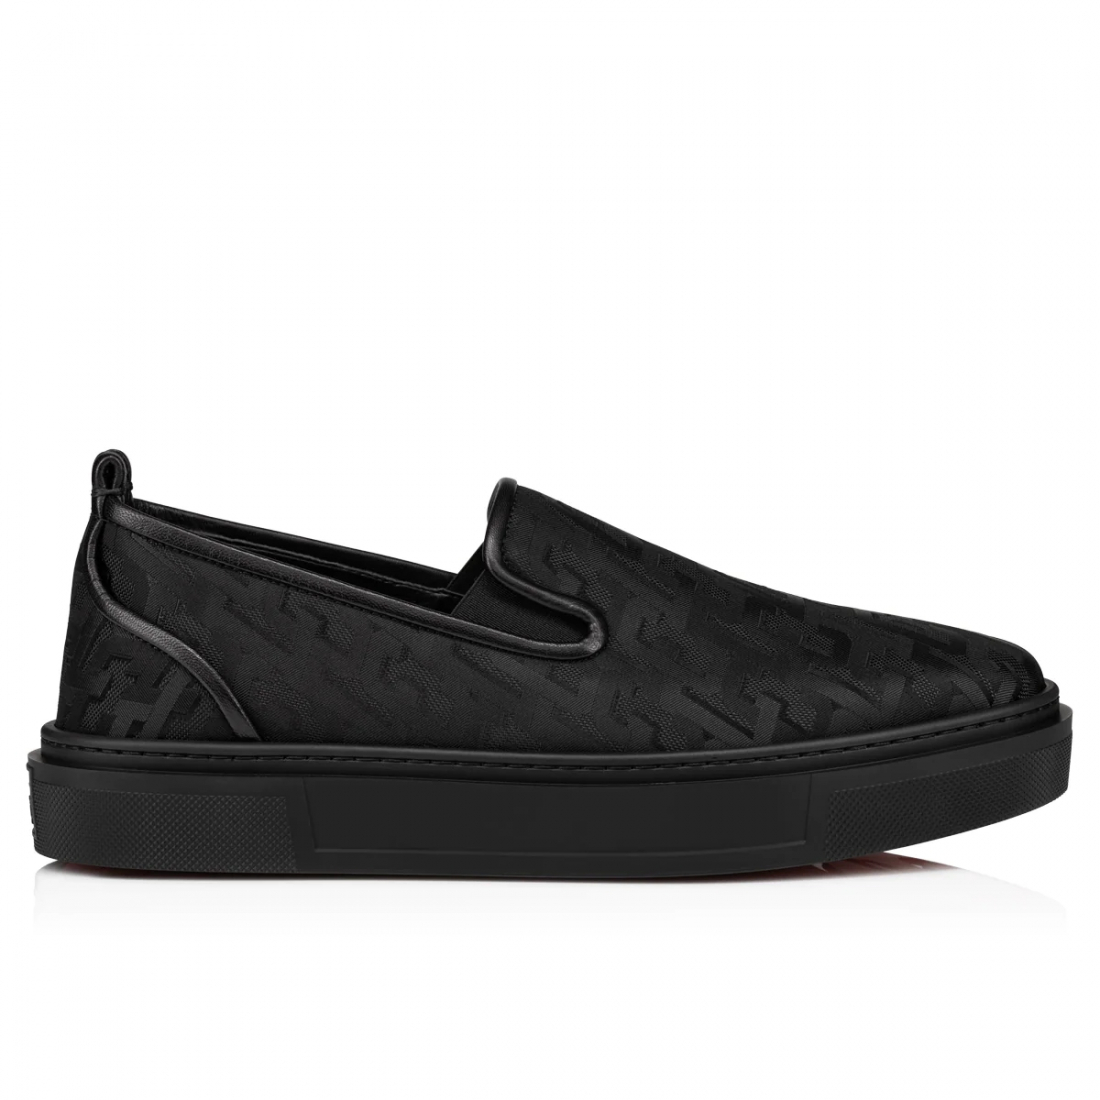 Men's 'Adolon Boat' Slip-on Sneakers